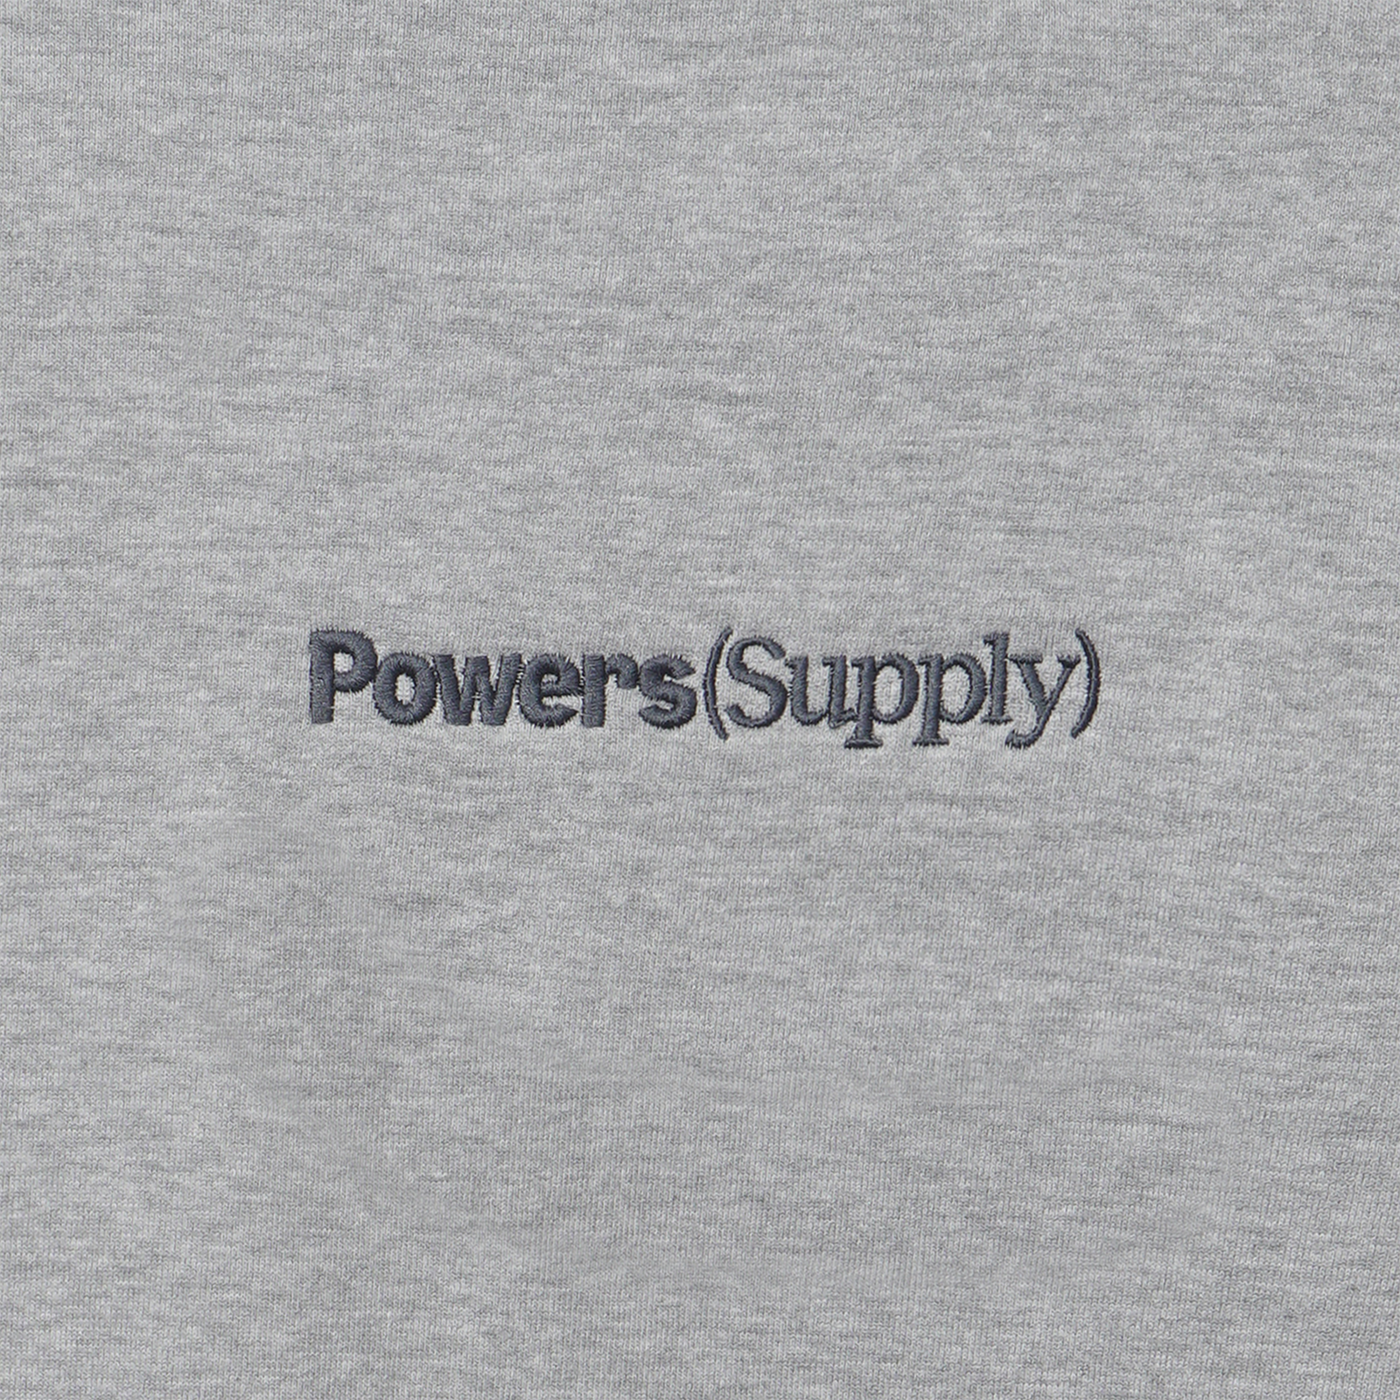 Powers(Supply) New Logo Crewneck